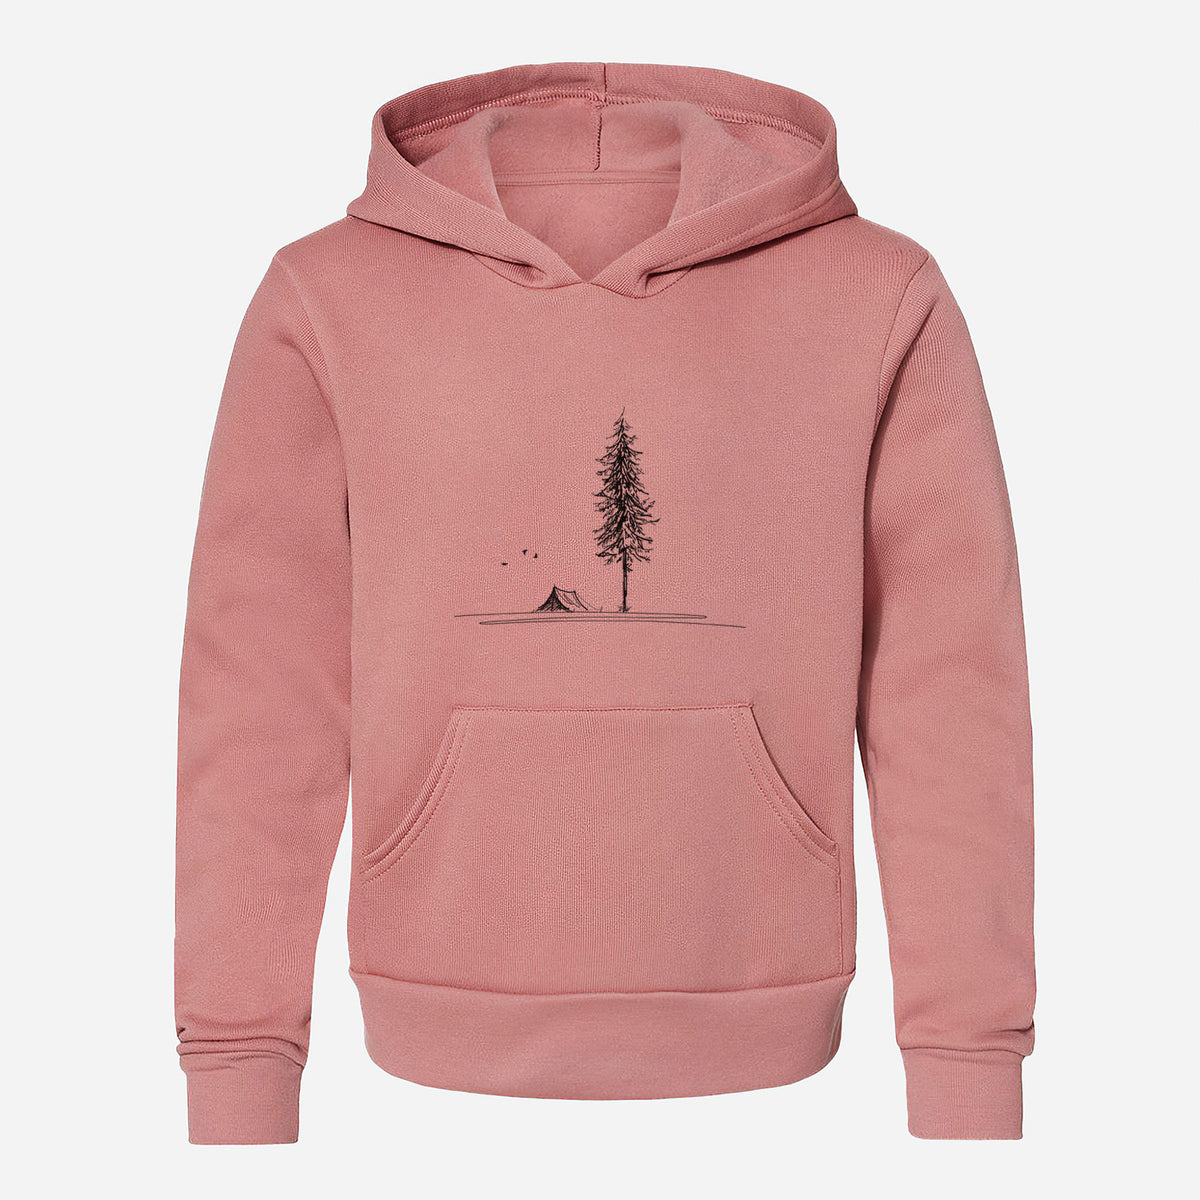 Pine Camp Vista - Youth Hoodie Sweatshirt